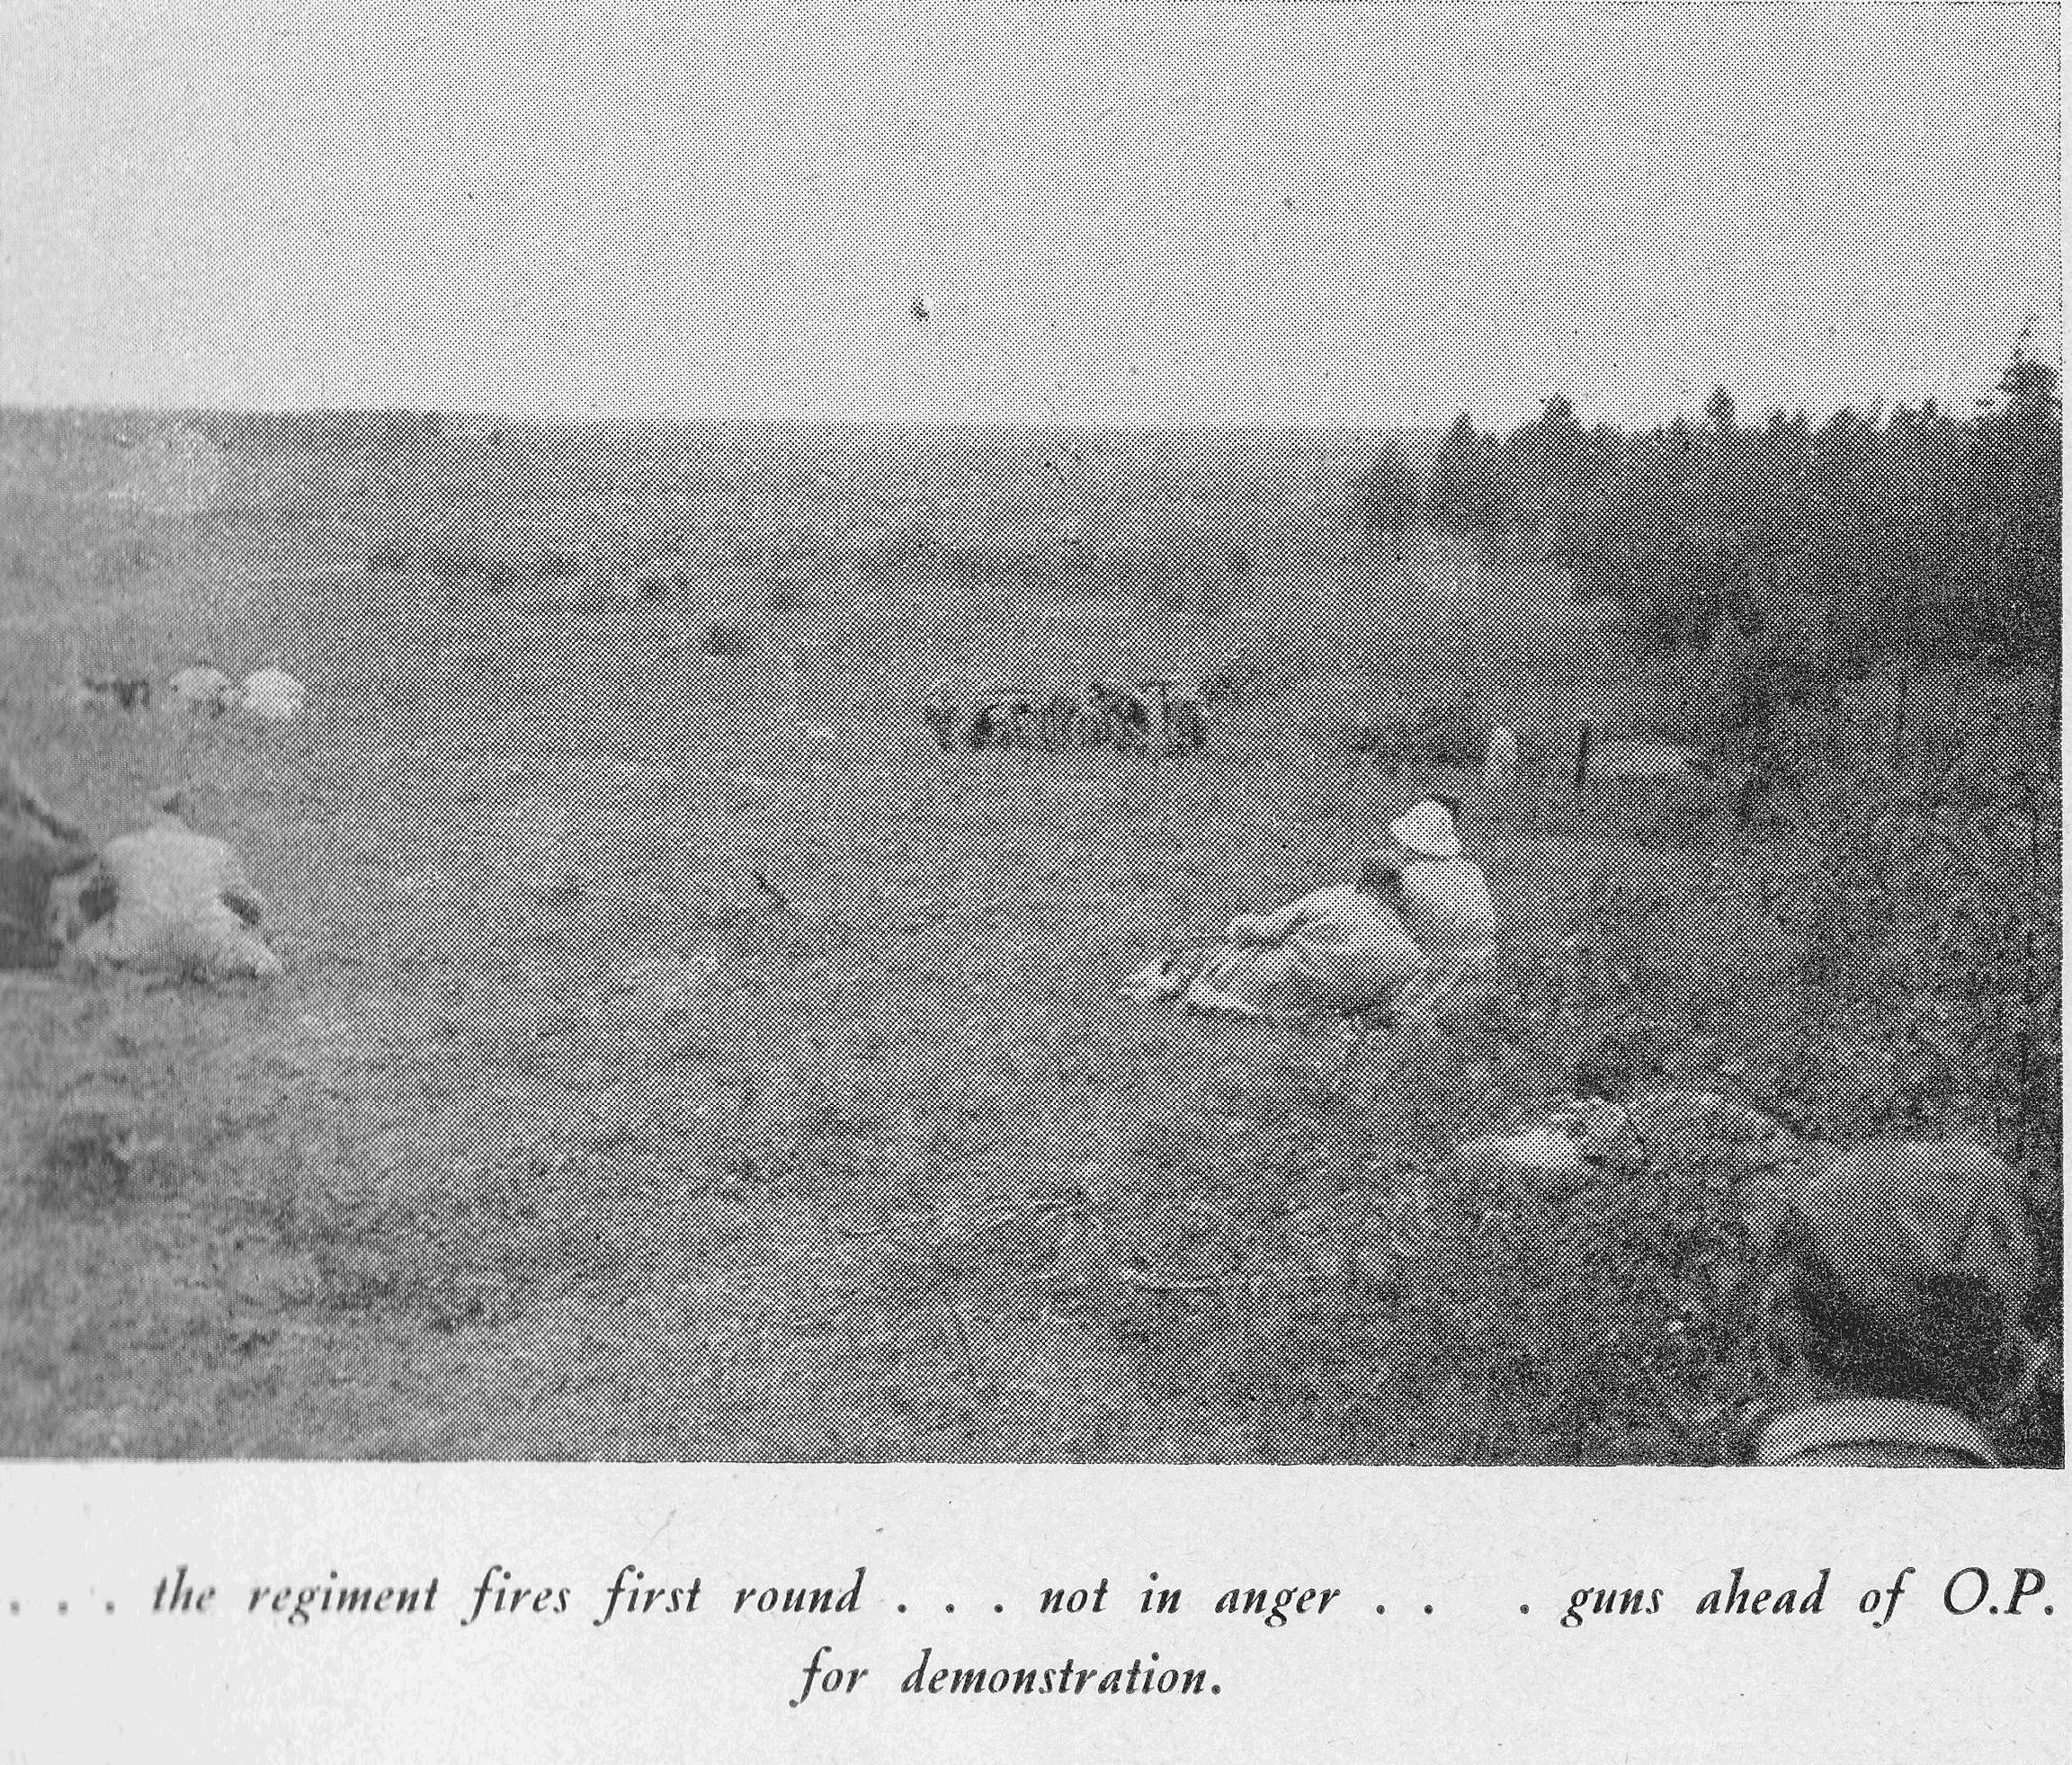 distance view of 17th Field Regiment firing first rounds at Petawawa